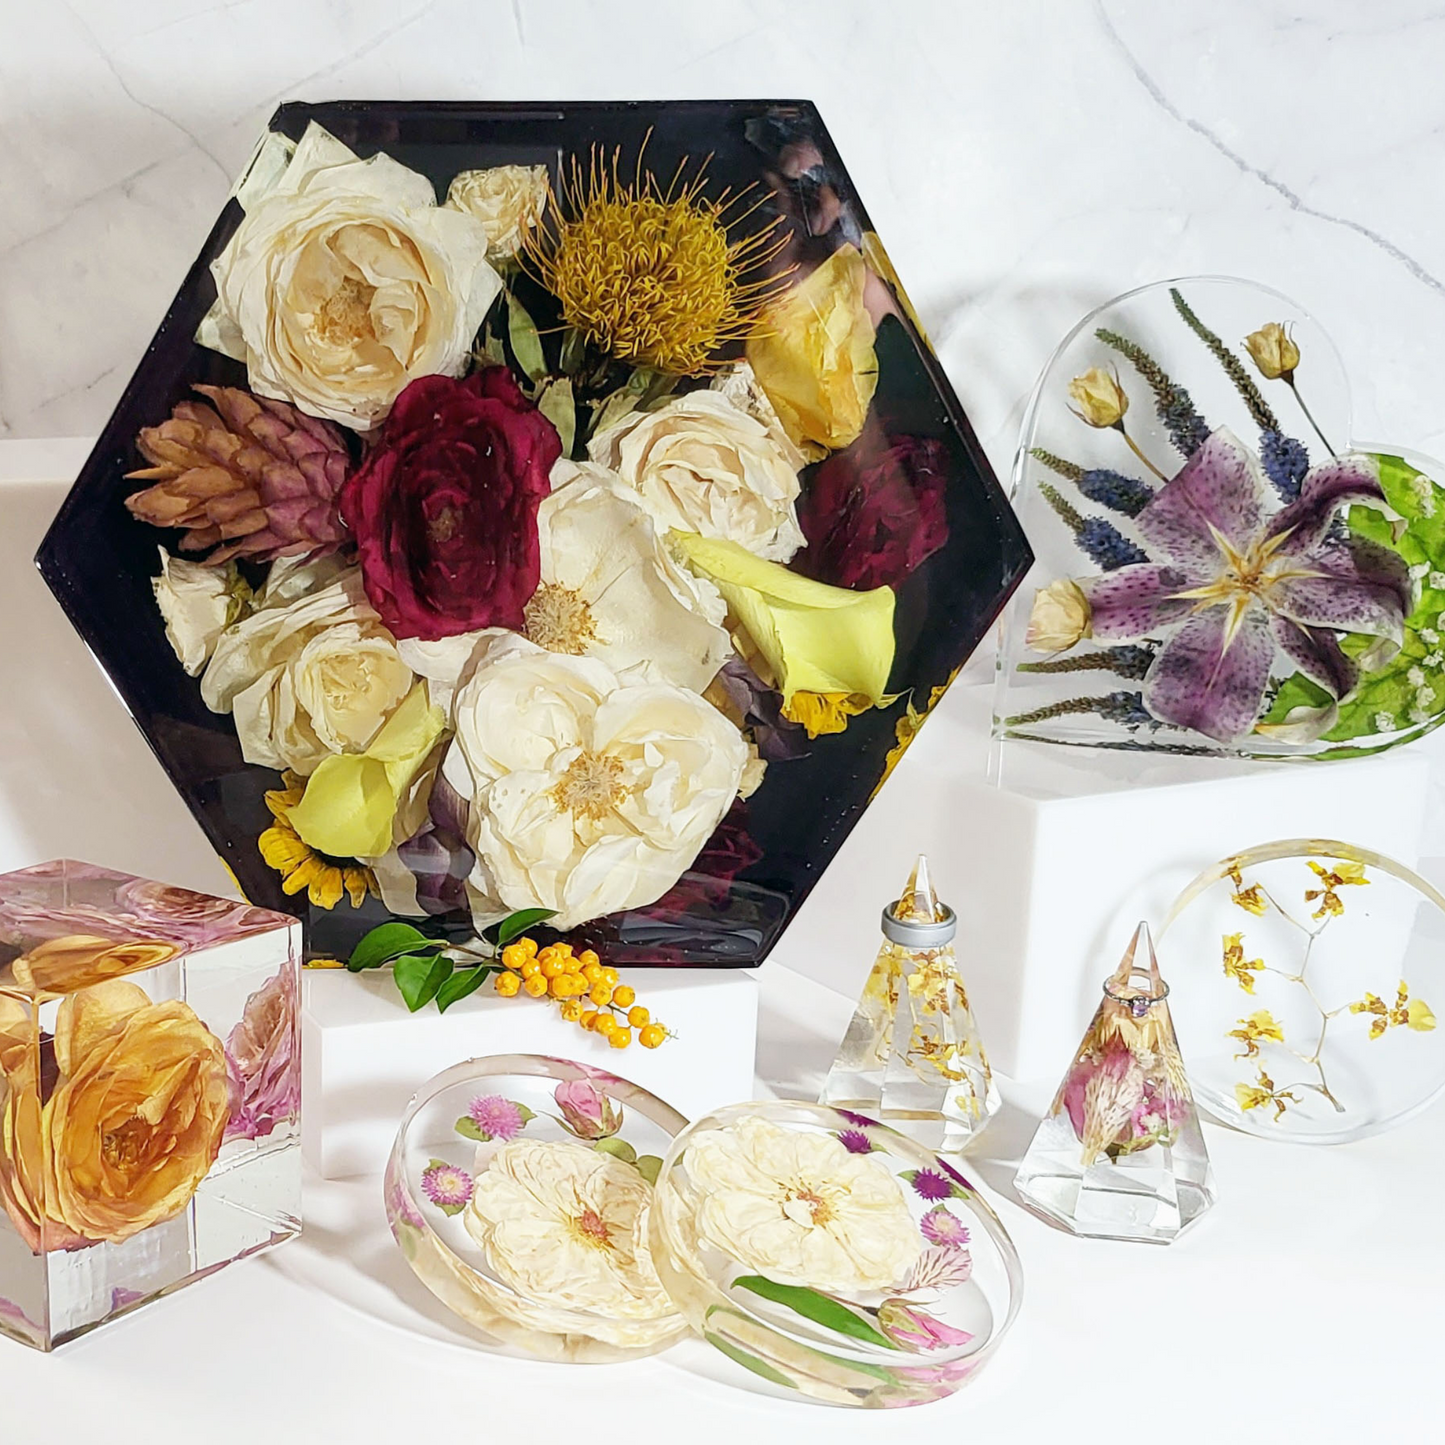 Large 12" Hexagon 3D Resin Wedding Bouquet Preservation Floral Gift Keepsake Save Your Wedding Flowers Forever - flofloflowery